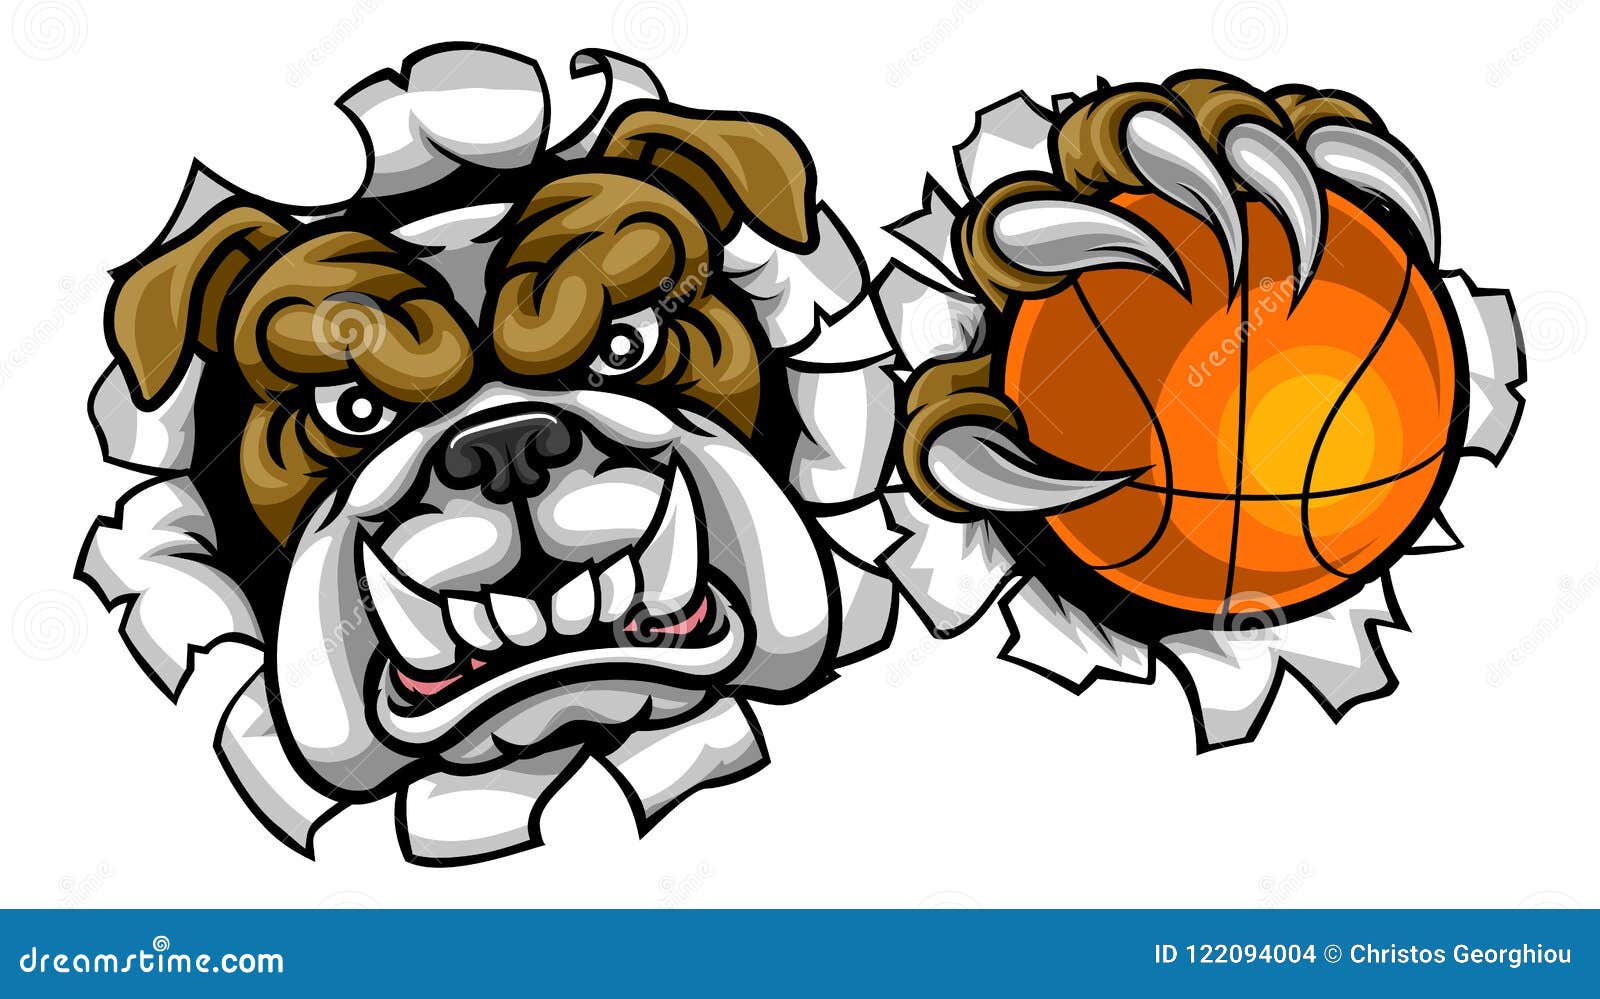 bulldog basketball sports mascot